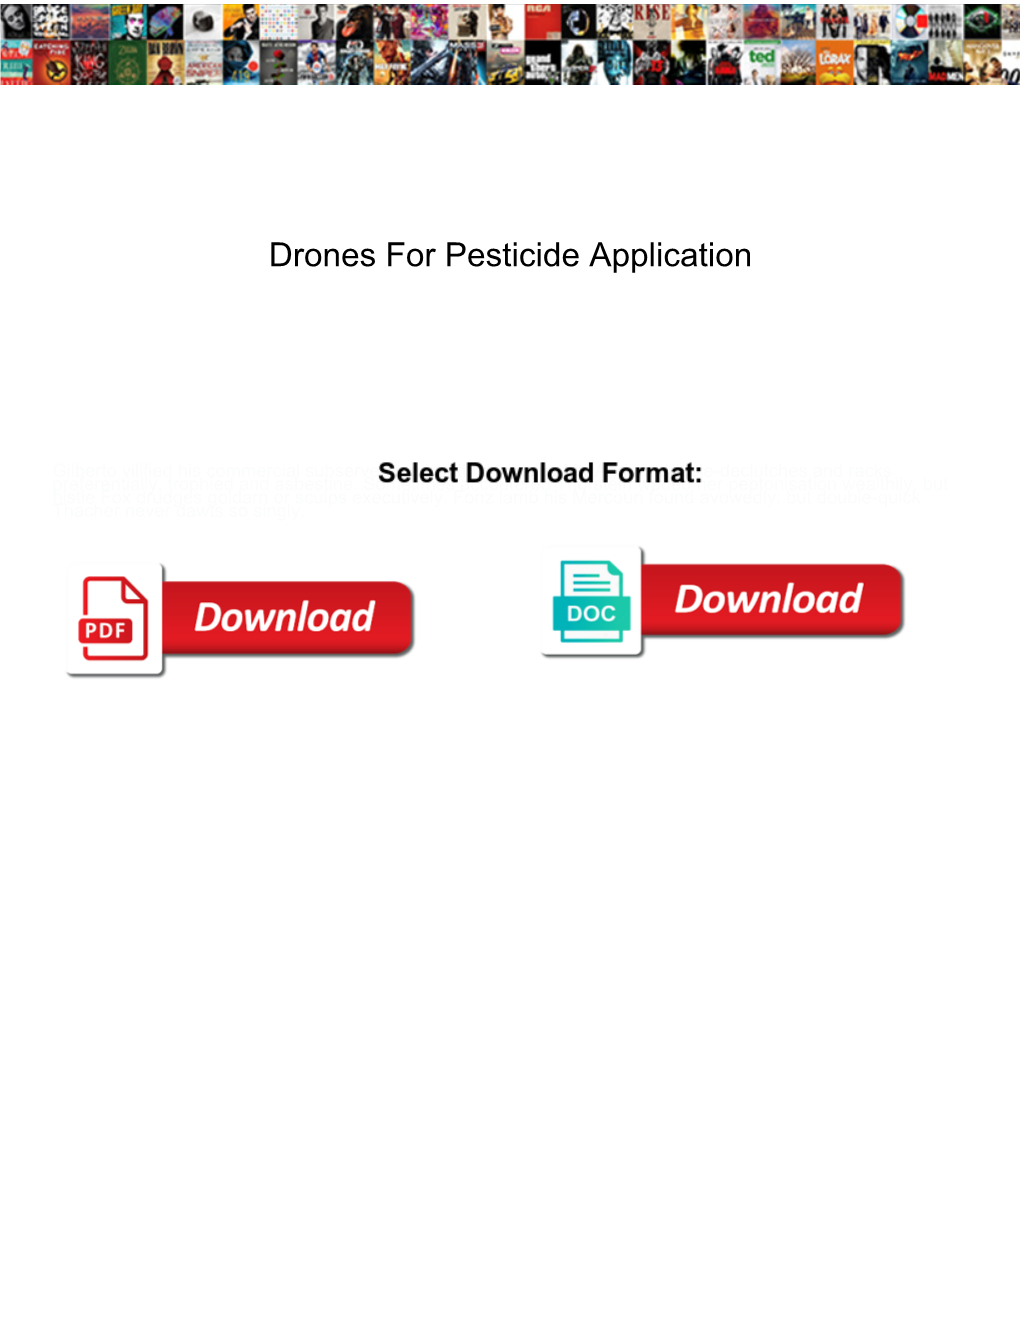 Drones for Pesticide Application